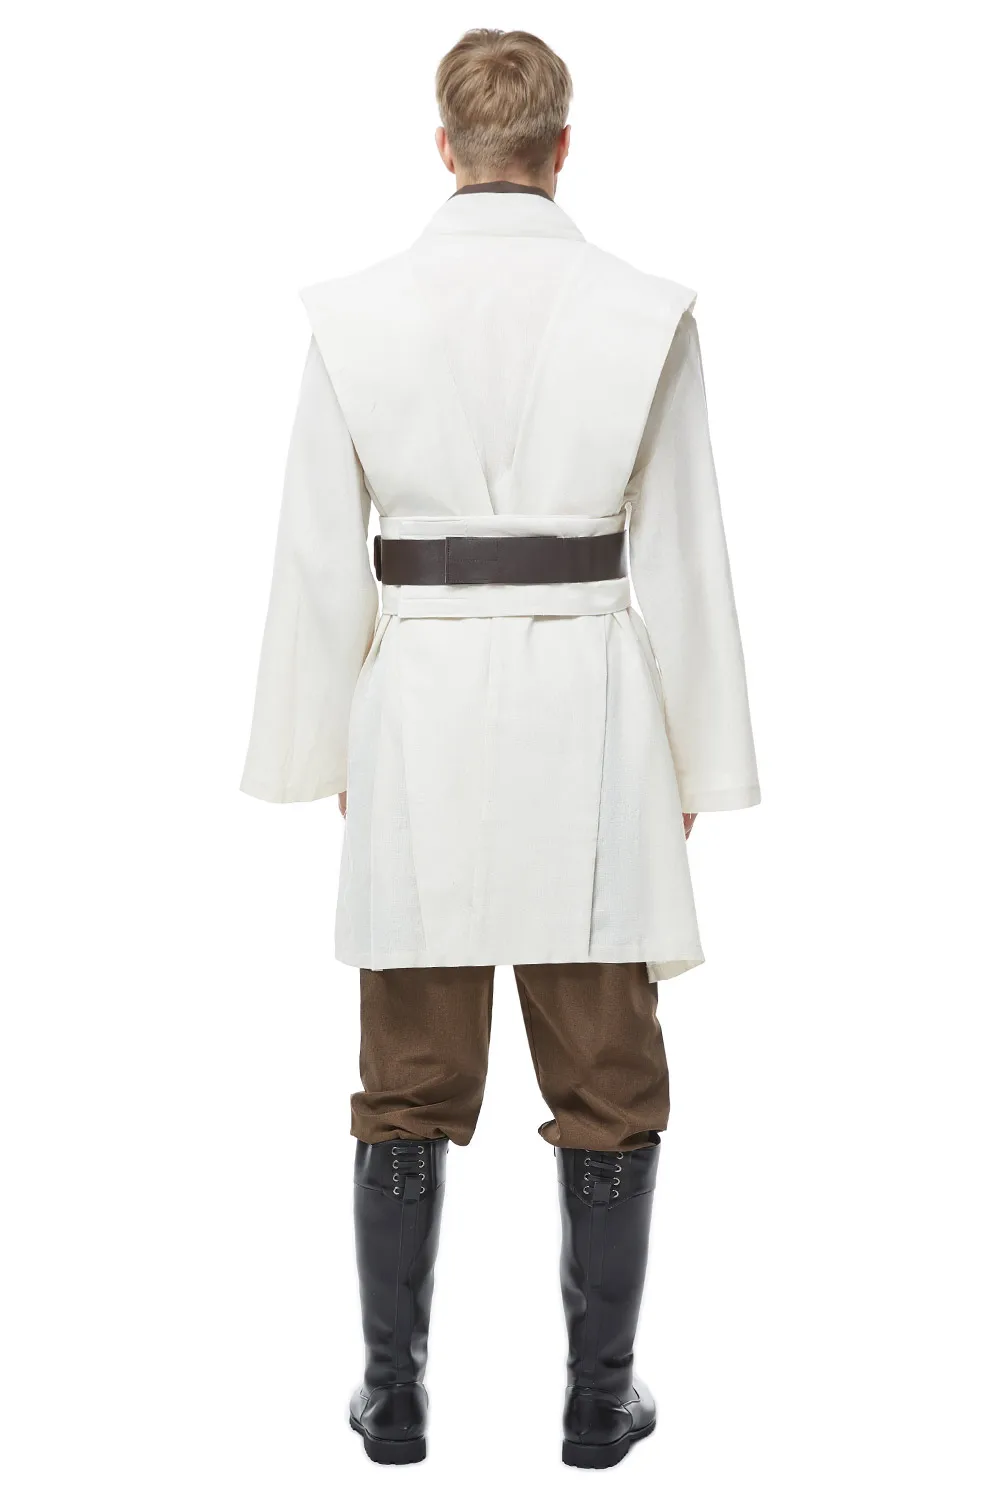 Cosplay&ware Obi Wan Kenobi Costume Jedi Robe Cloak Star Wars -Outlet Maid Outfit Store S6a1ee17797004c43b3cad58dc3fd954eg.jpg